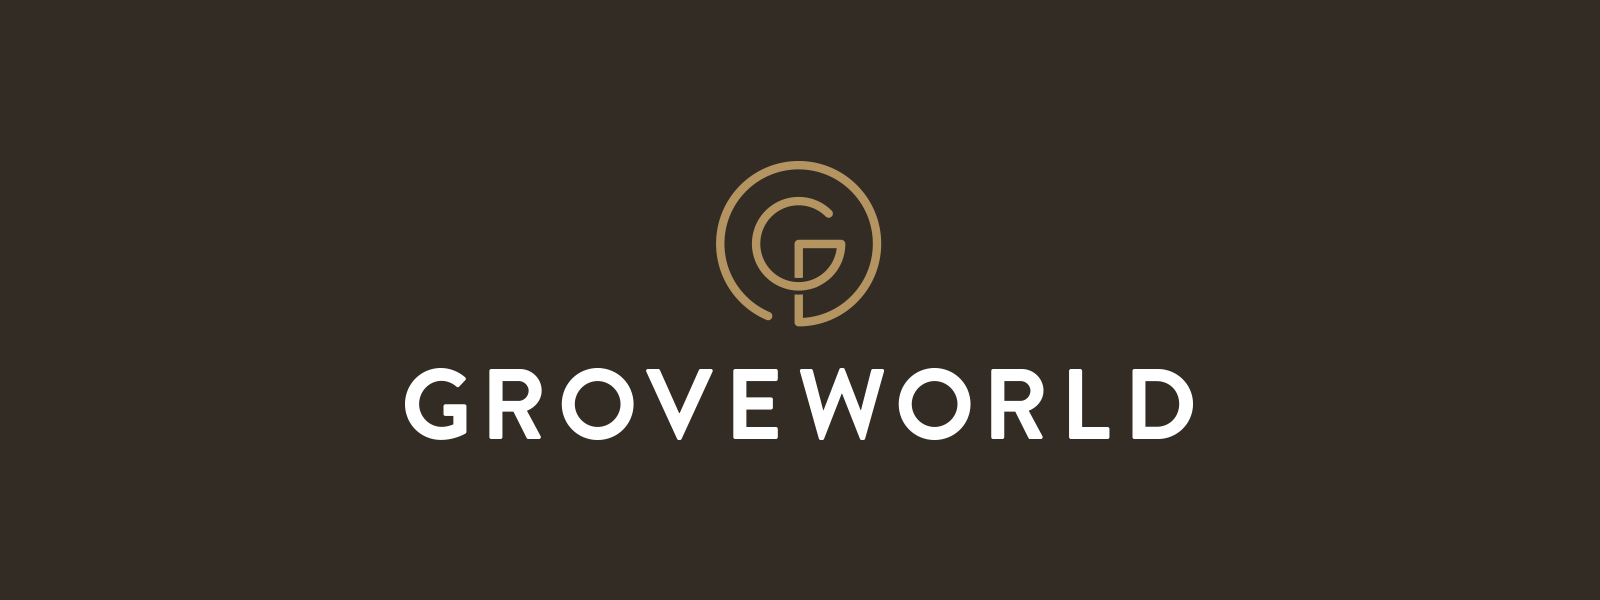 Groveworld rebrand and website